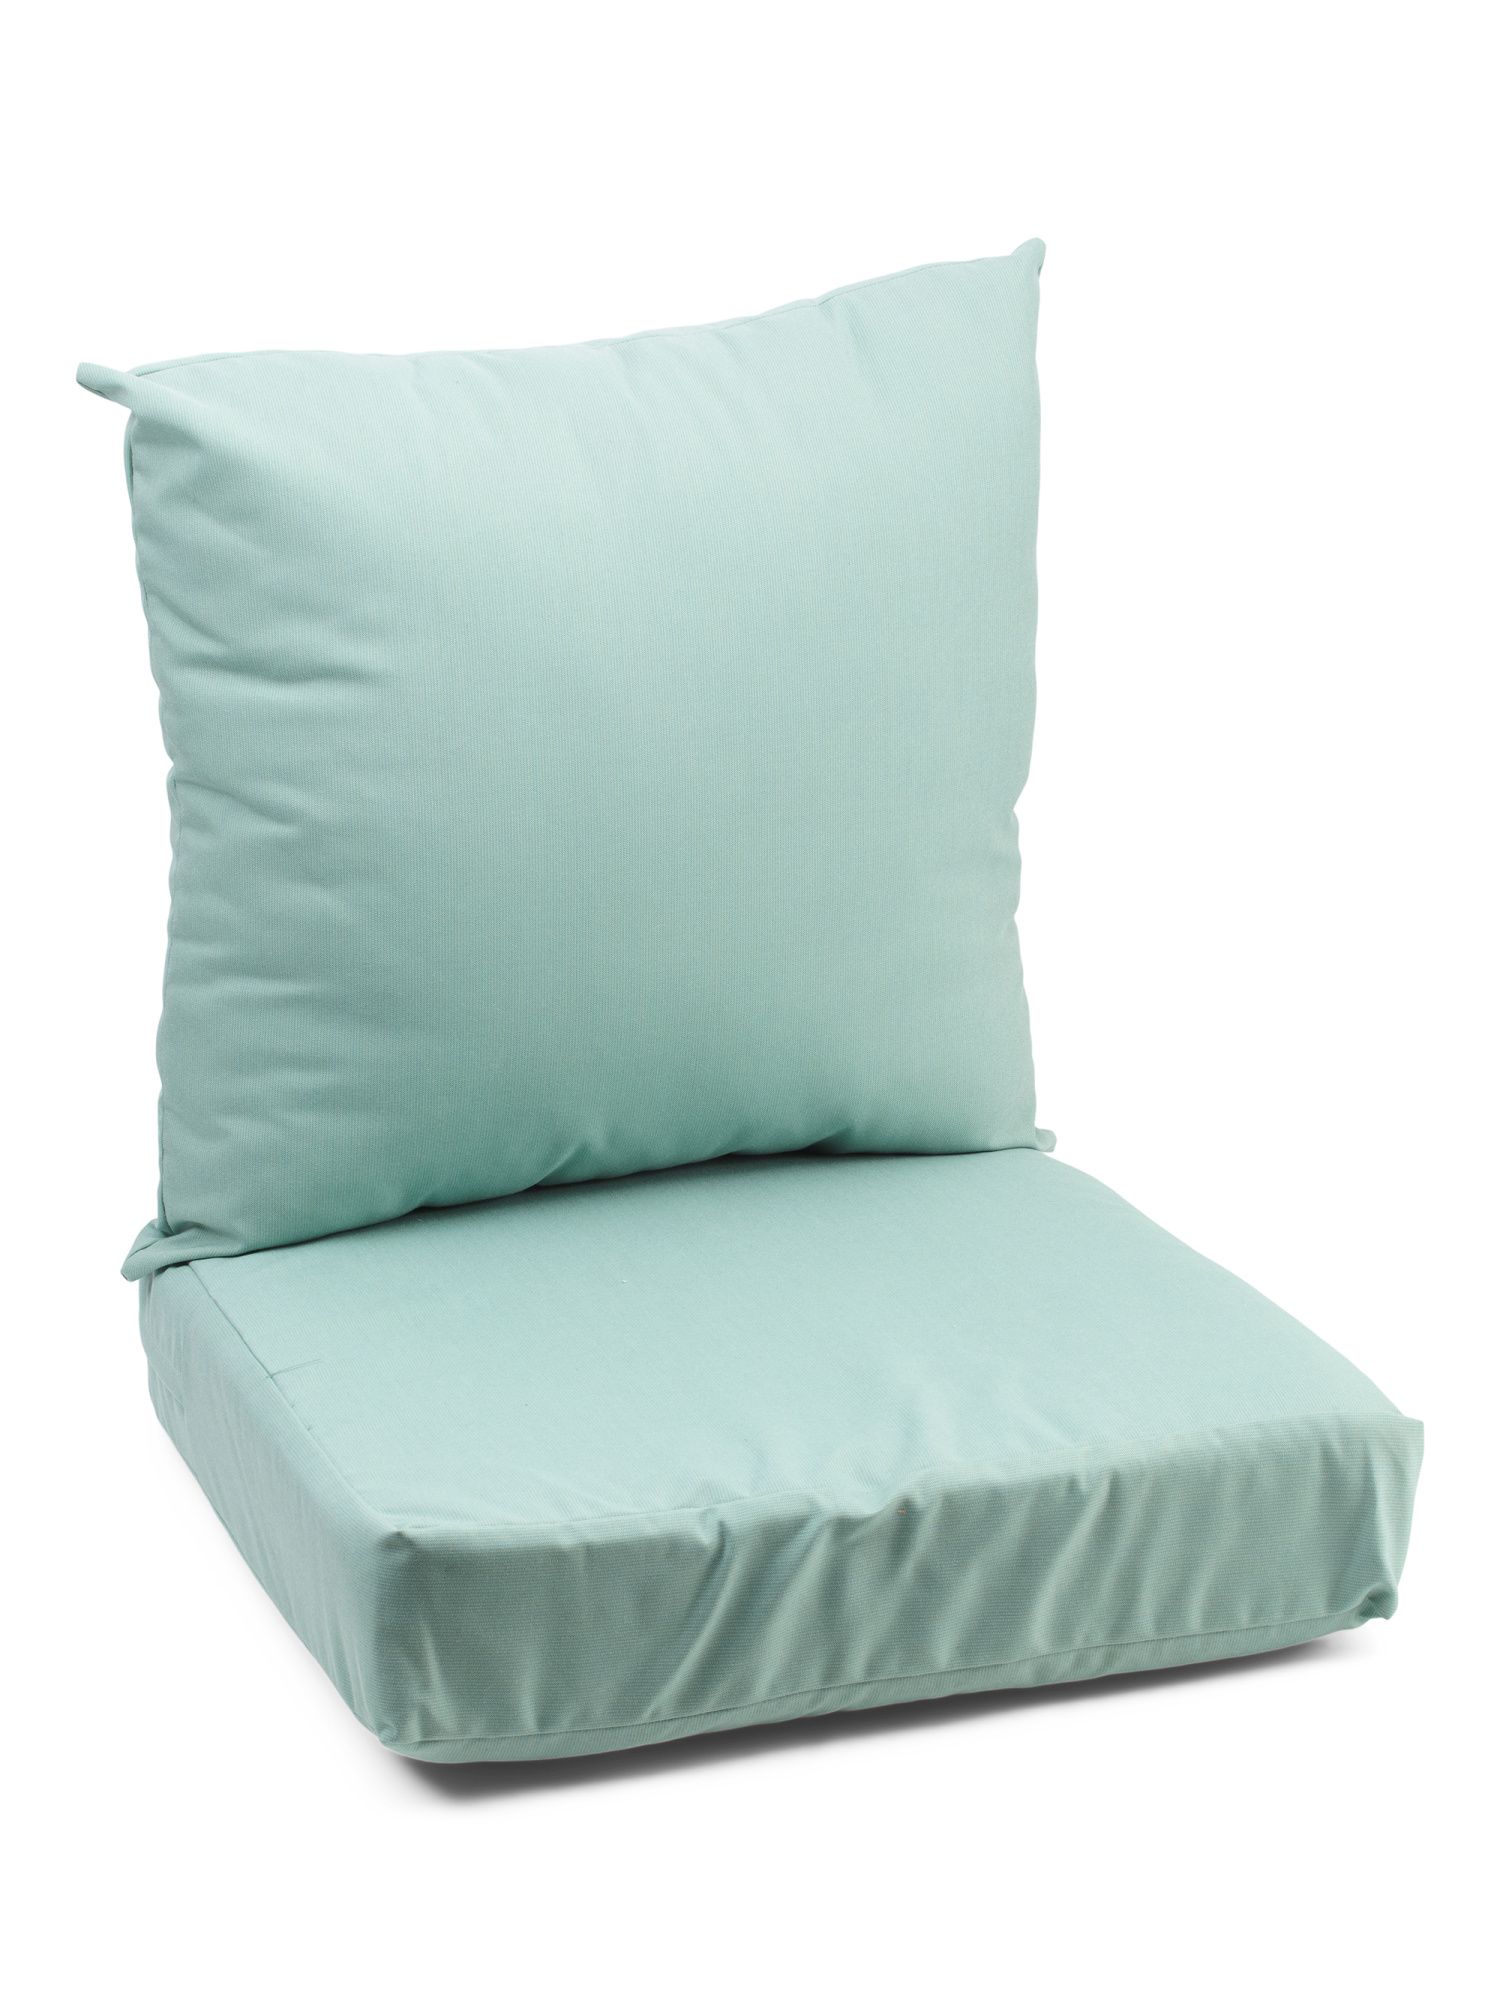 Outdoor Deep Seat Cushion And Pillow Set | Throw Pillows | Marshalls | Marshalls